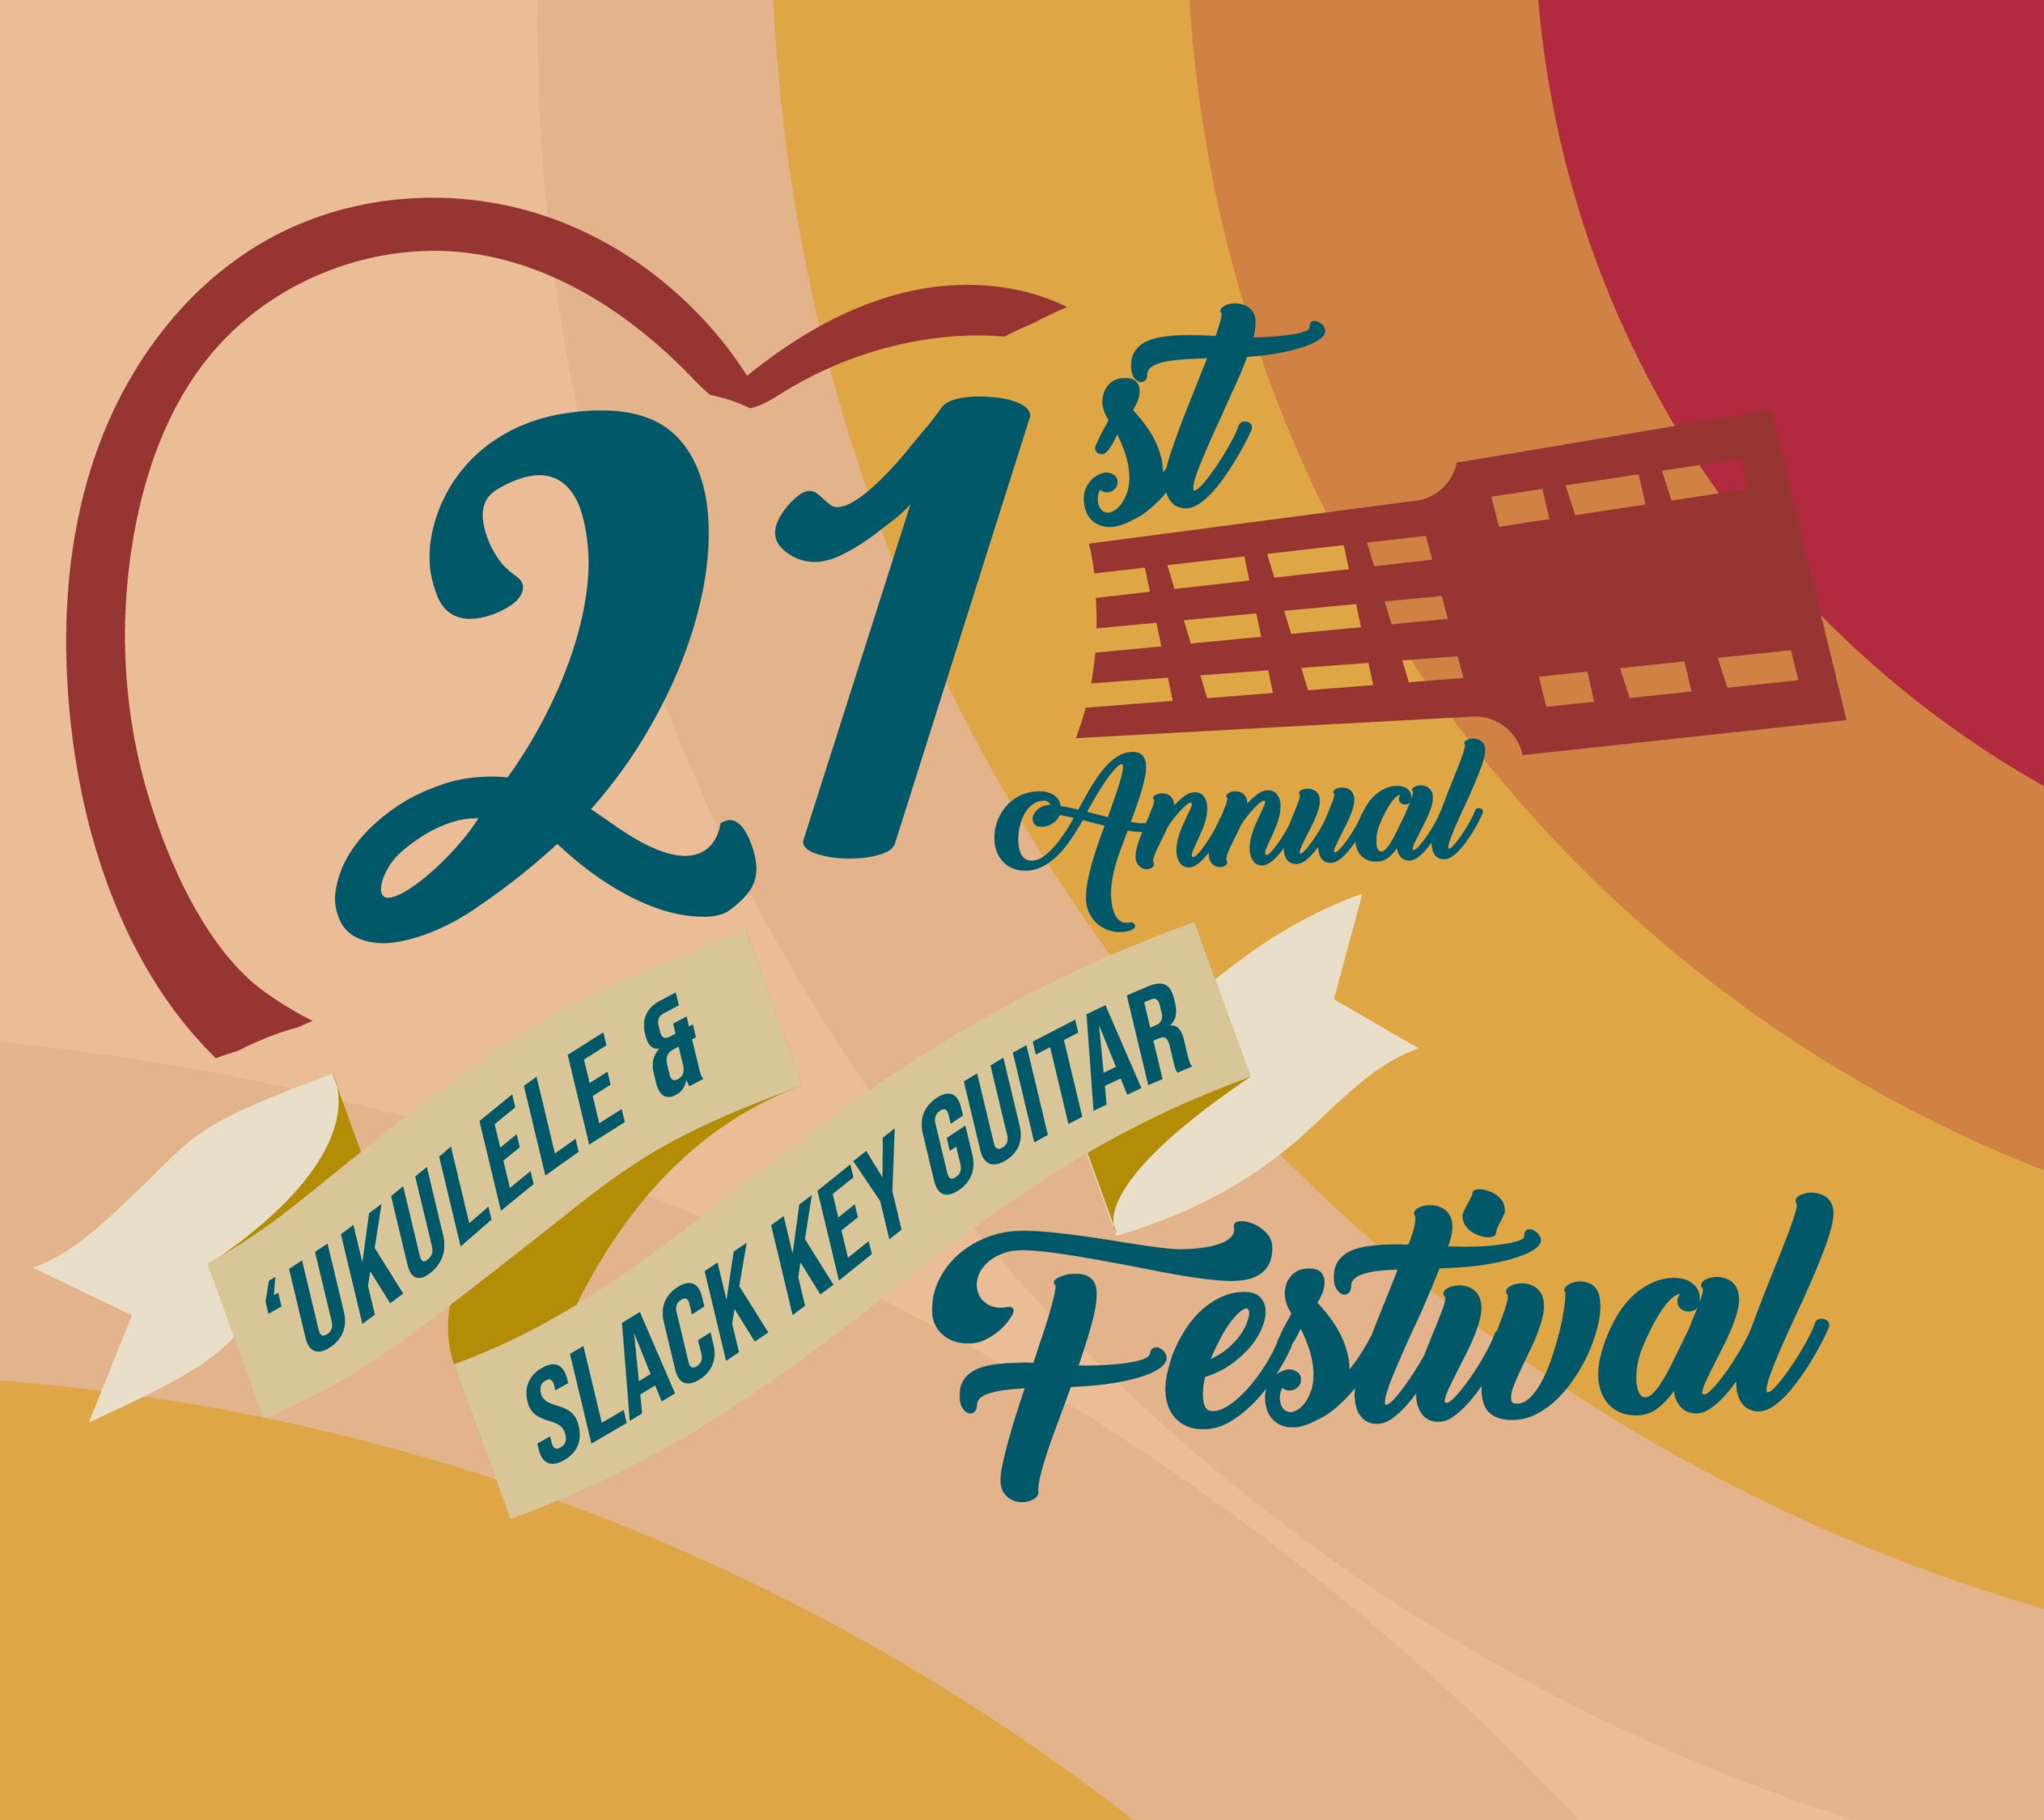 21st annual ukulele & slack key guitar festival.